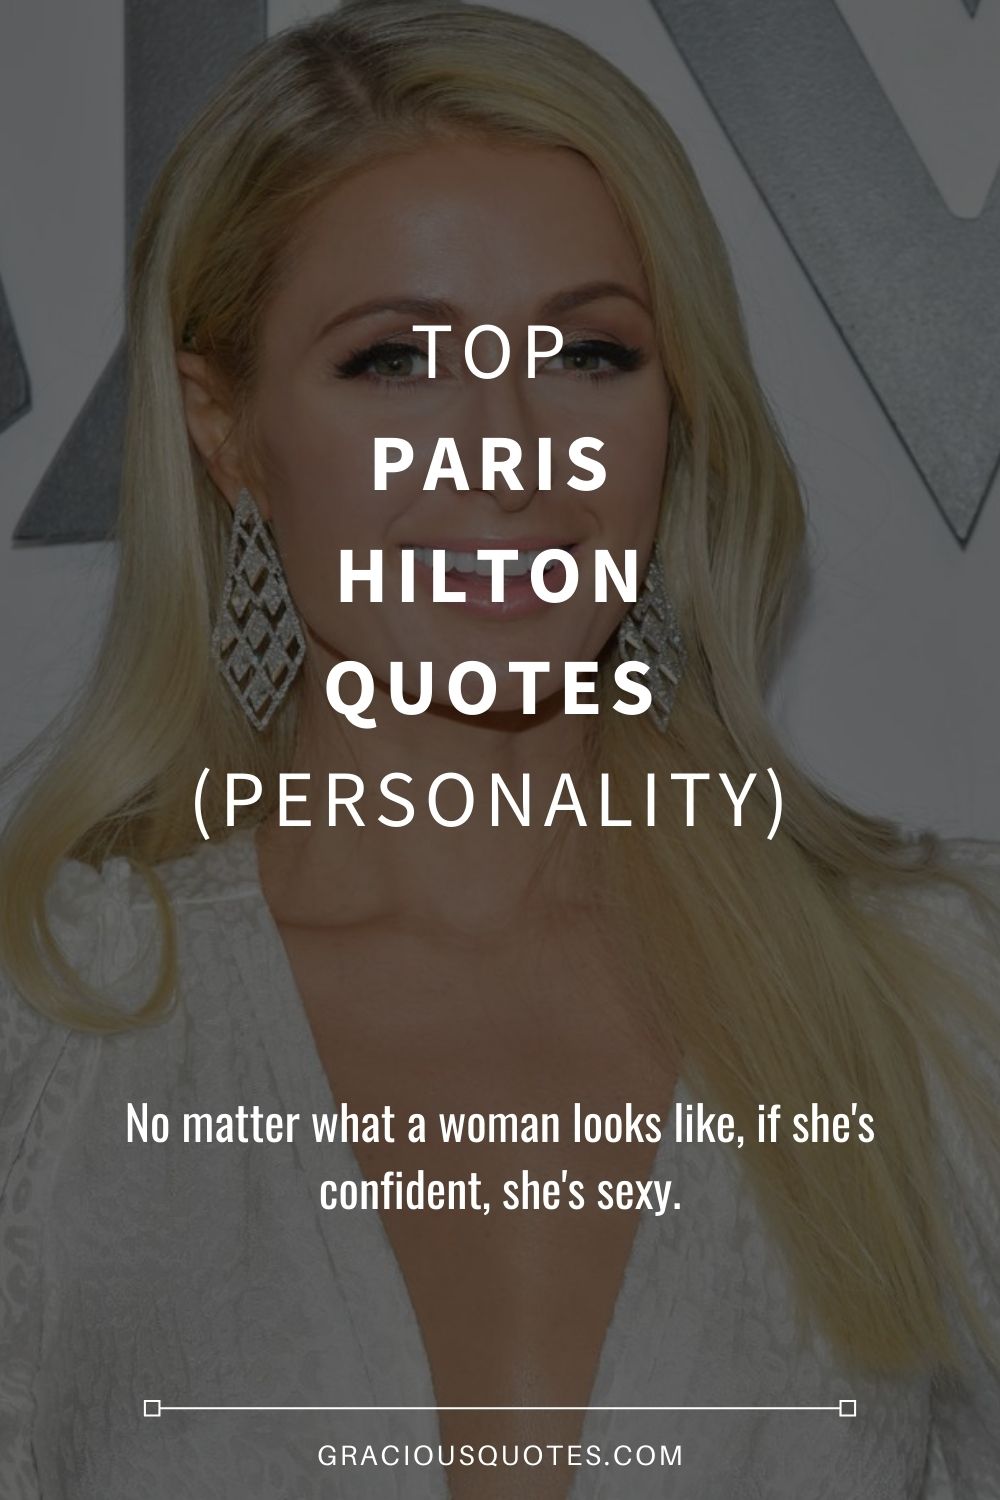 Top Paris Hilton Quotes (PERSONALITY) - Gracious Quotes